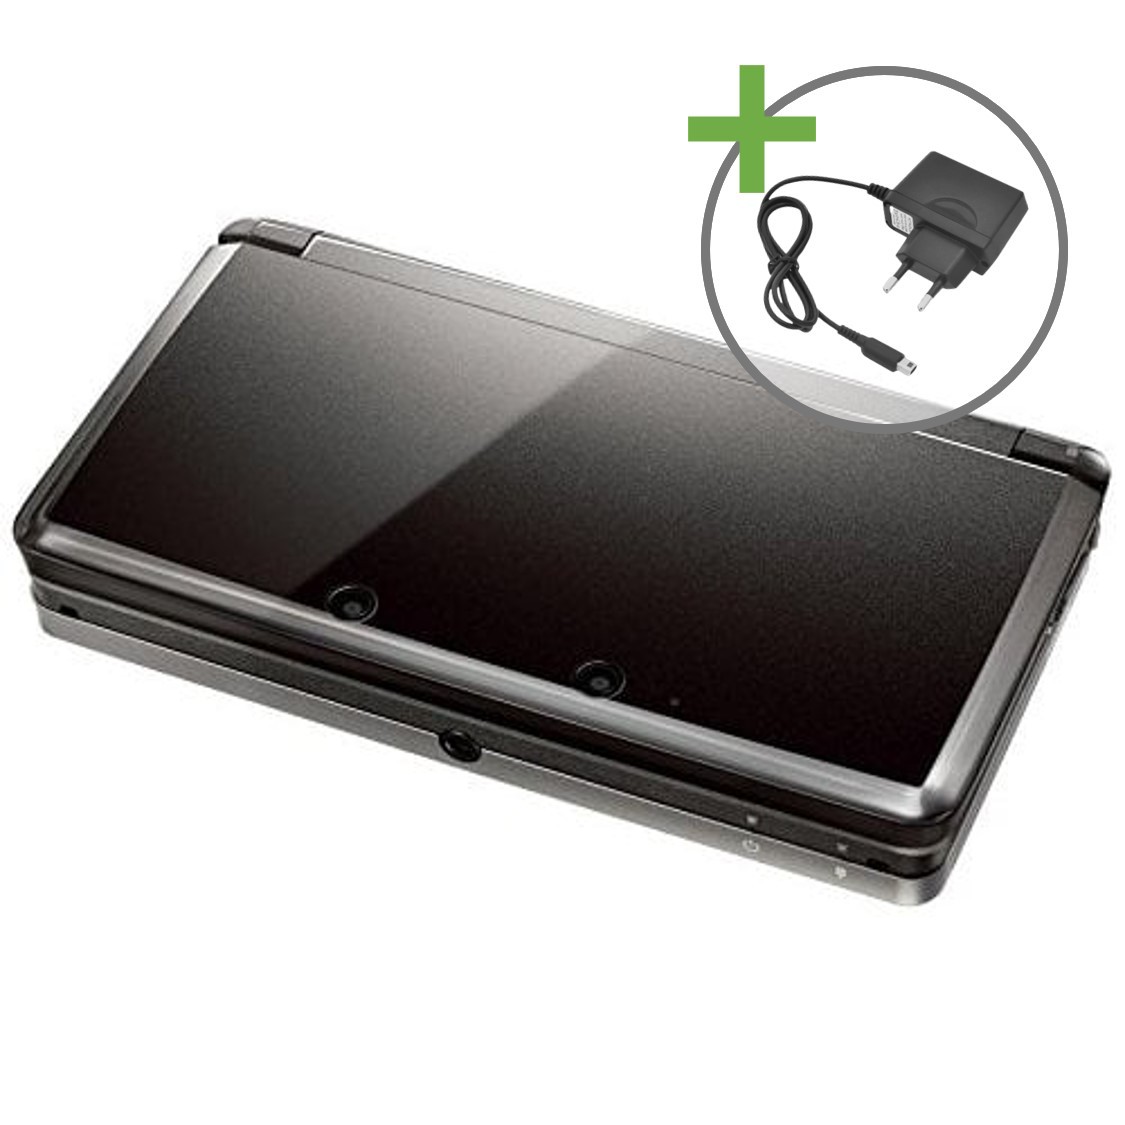 Nintendo 3DS - Cosmos Black | Nintendo 3DS Hardware | RetroNintendoKopen.nl